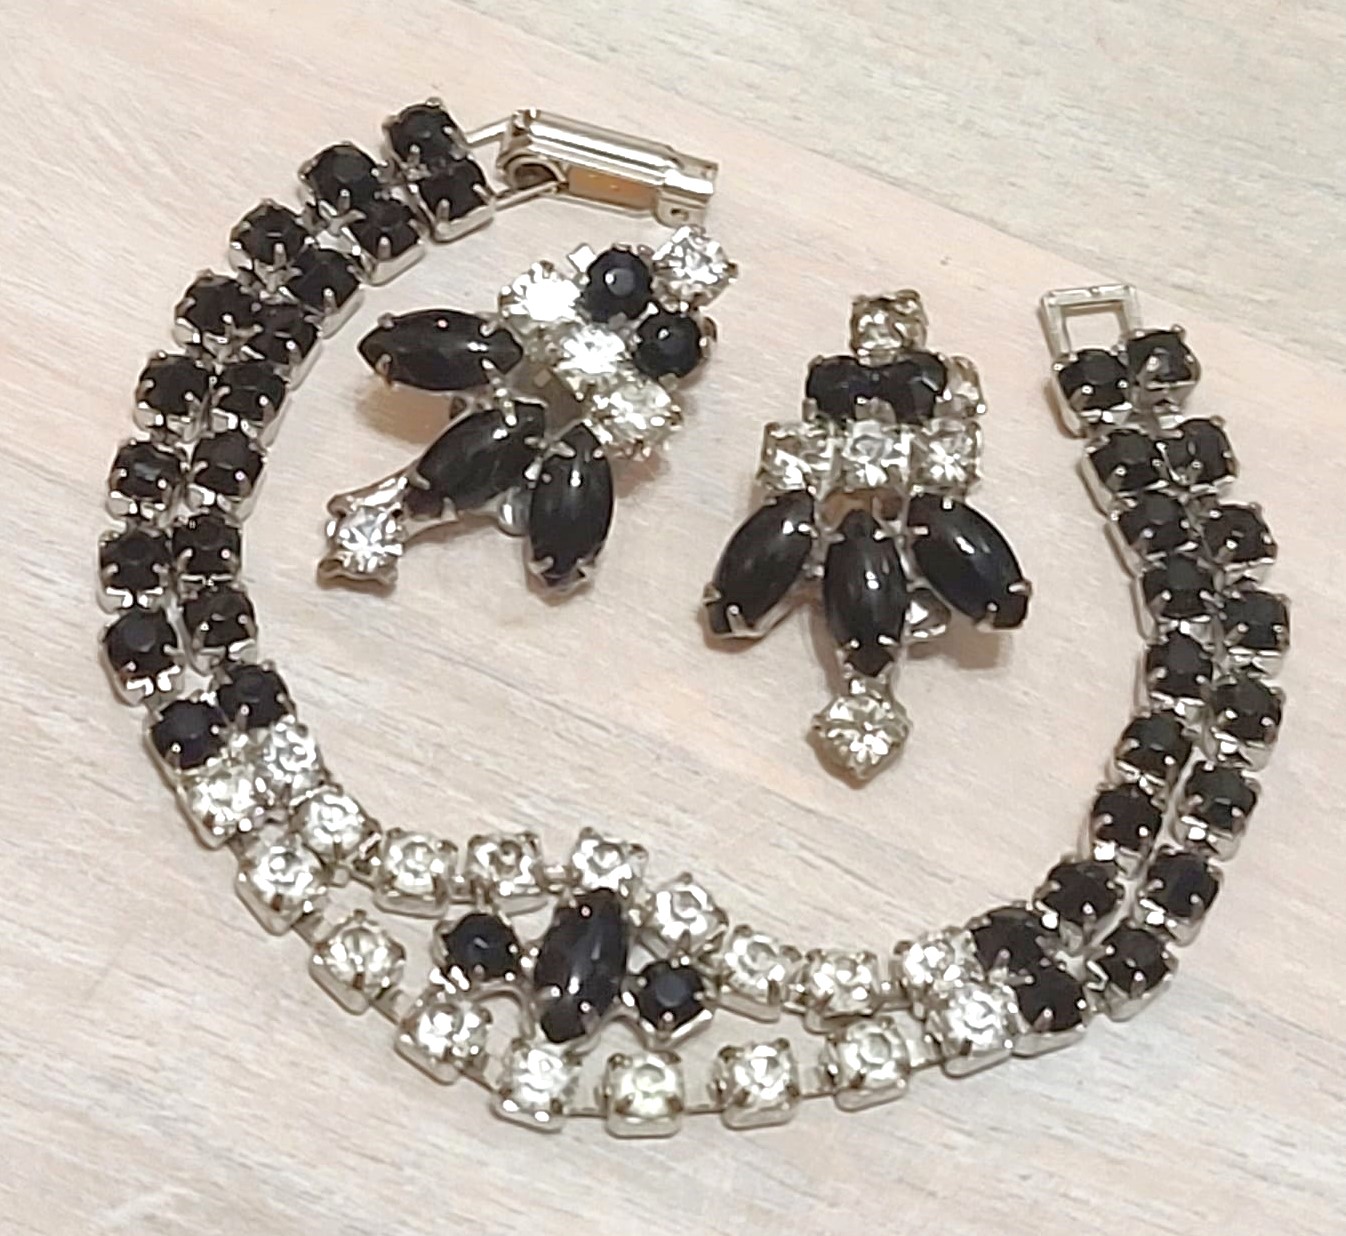 Rhinestone bracelet and clip on earrings set, vintage, black and white rhineestones